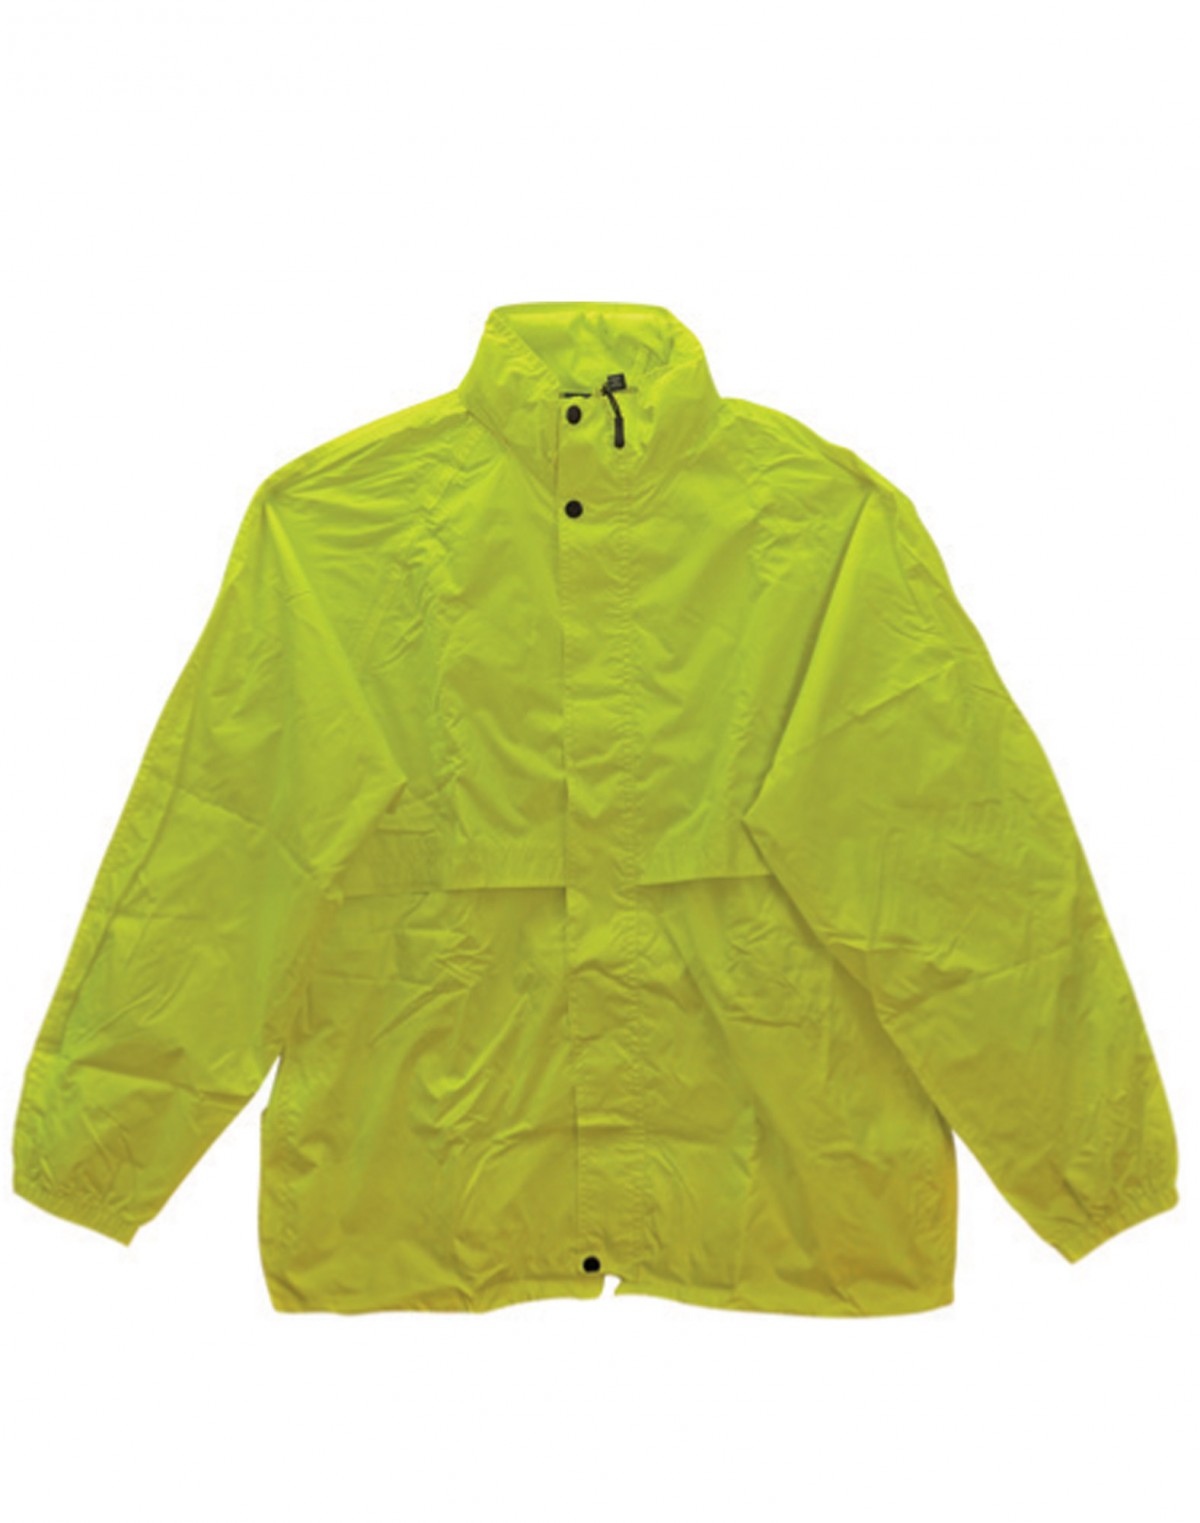 Men's High Visibility Spray Jacket - Jumpers, Jackets & Vests - SAFETY WEAR